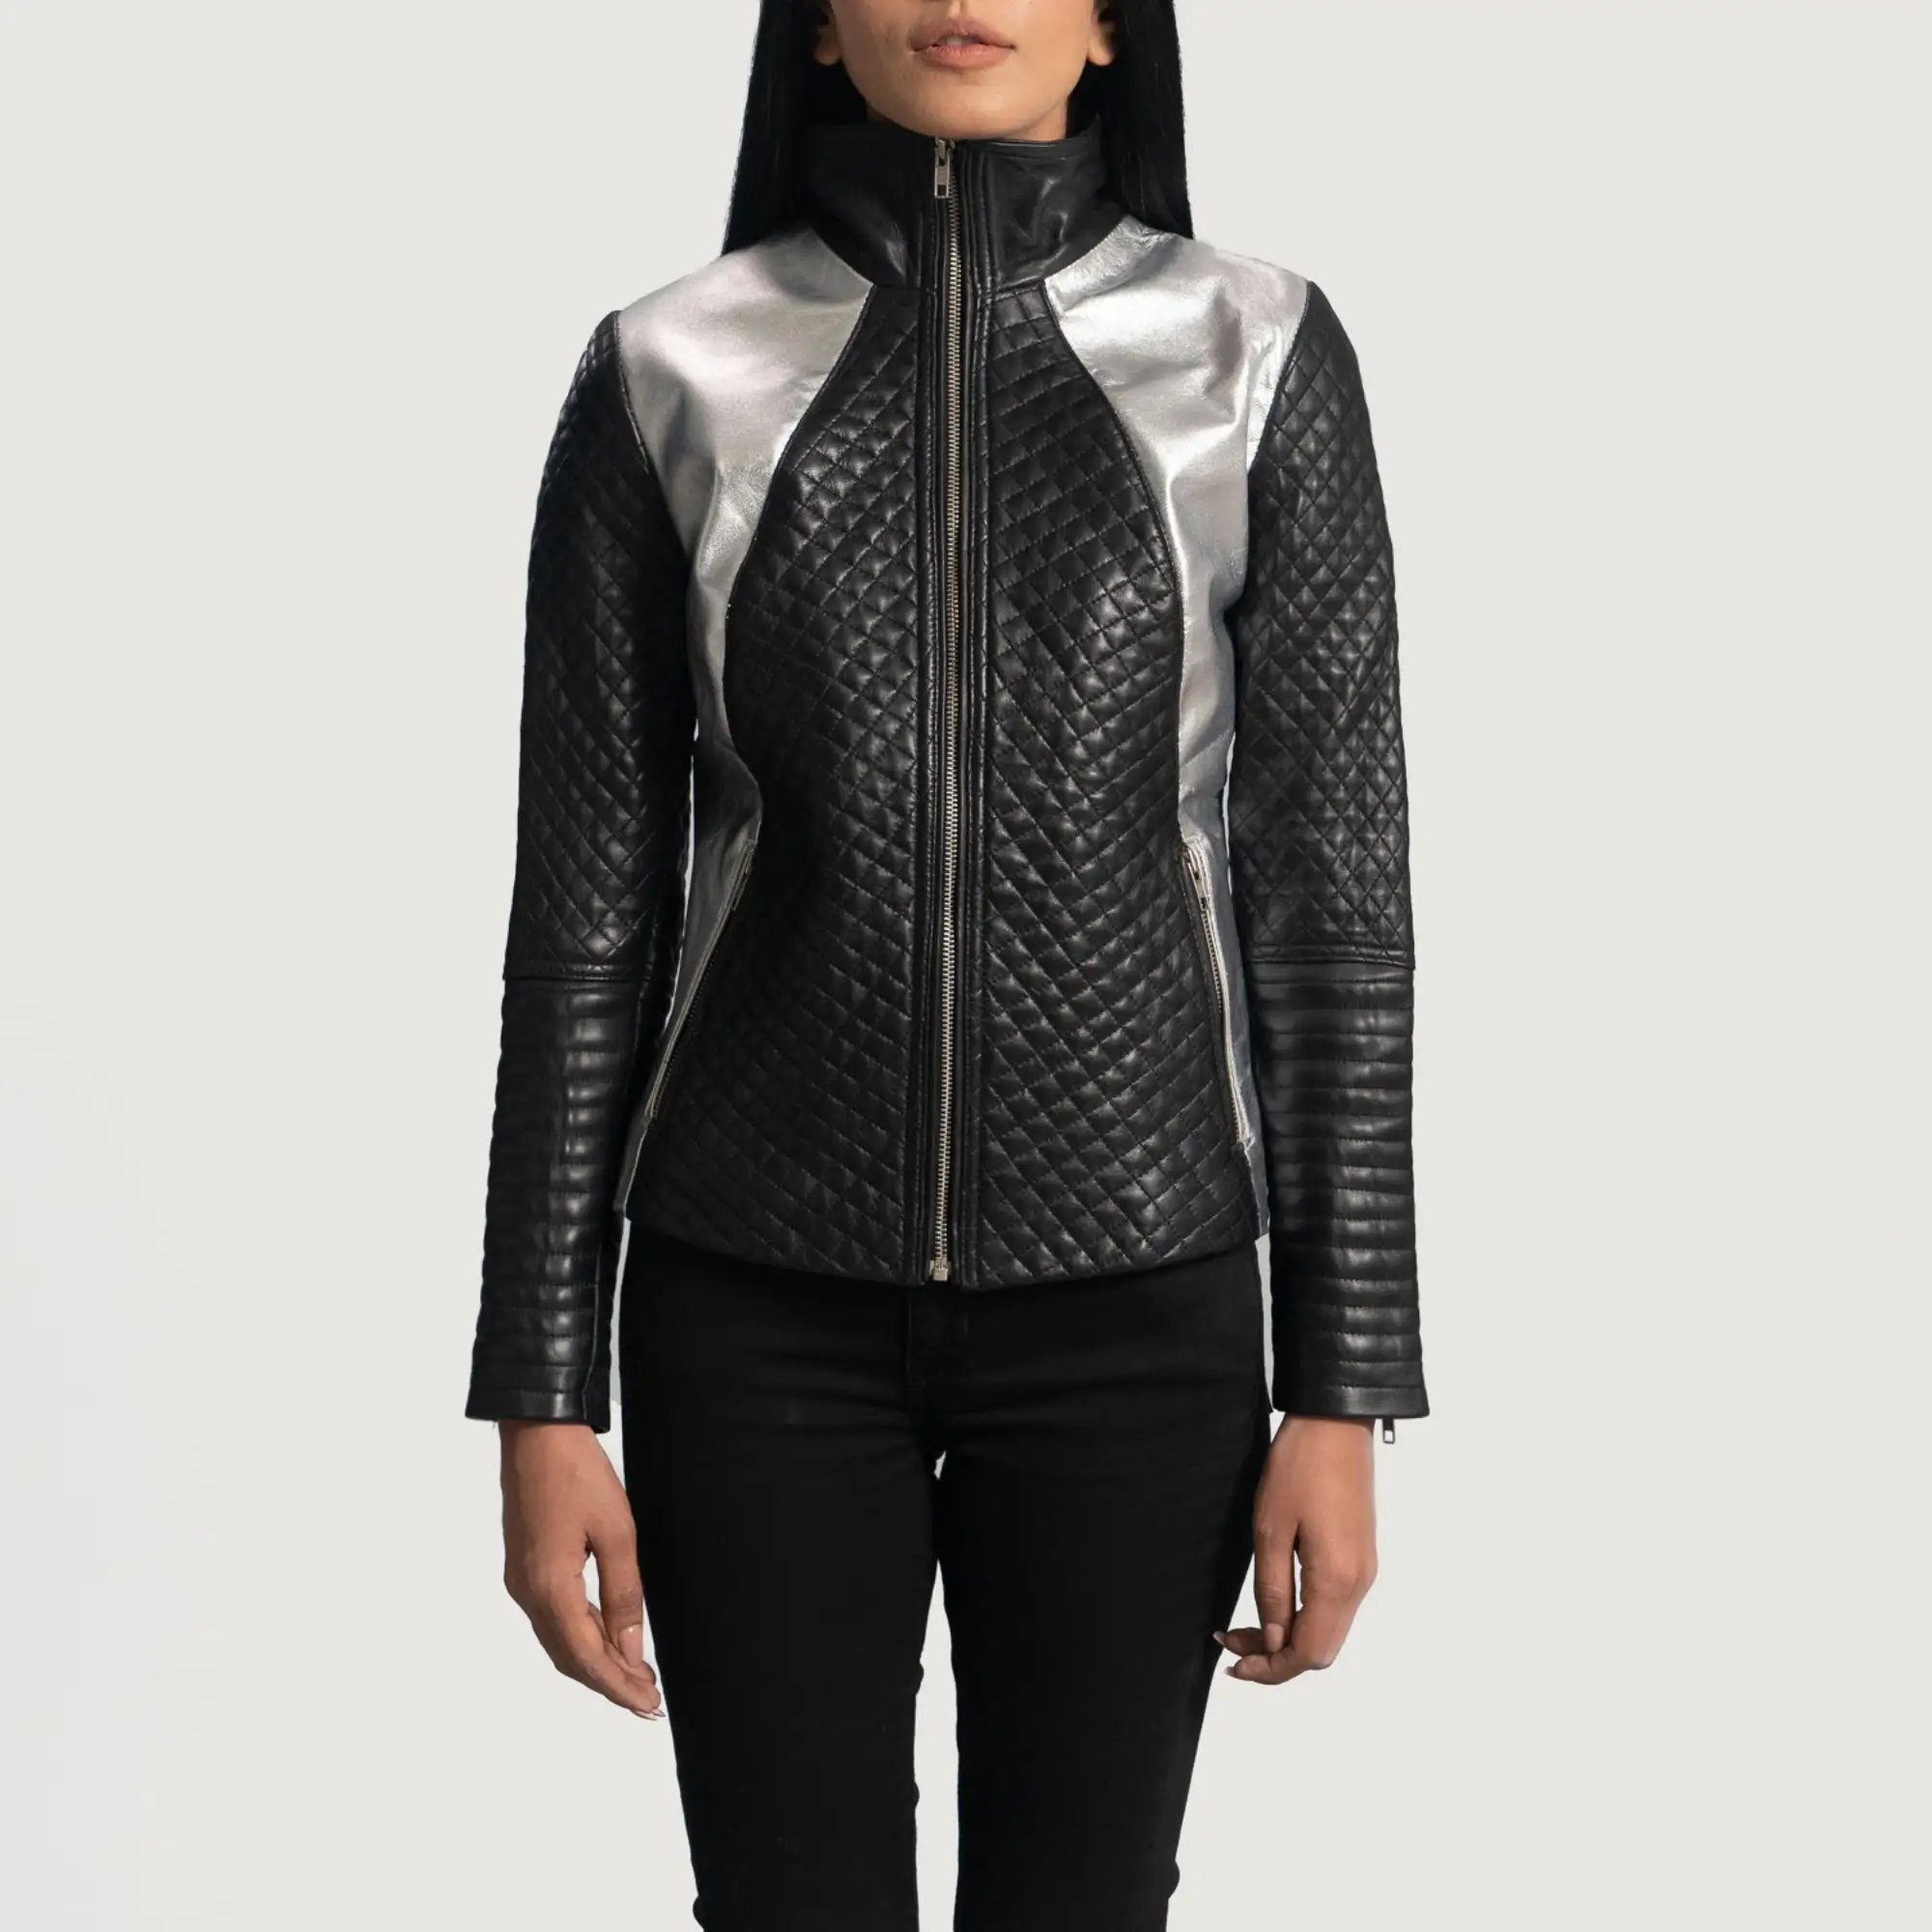 Real Leather Sheepskin Women's Biker Jacket Aniline Zipper Alia Metallic Black with Quilted Viscose Lining inside Pockets